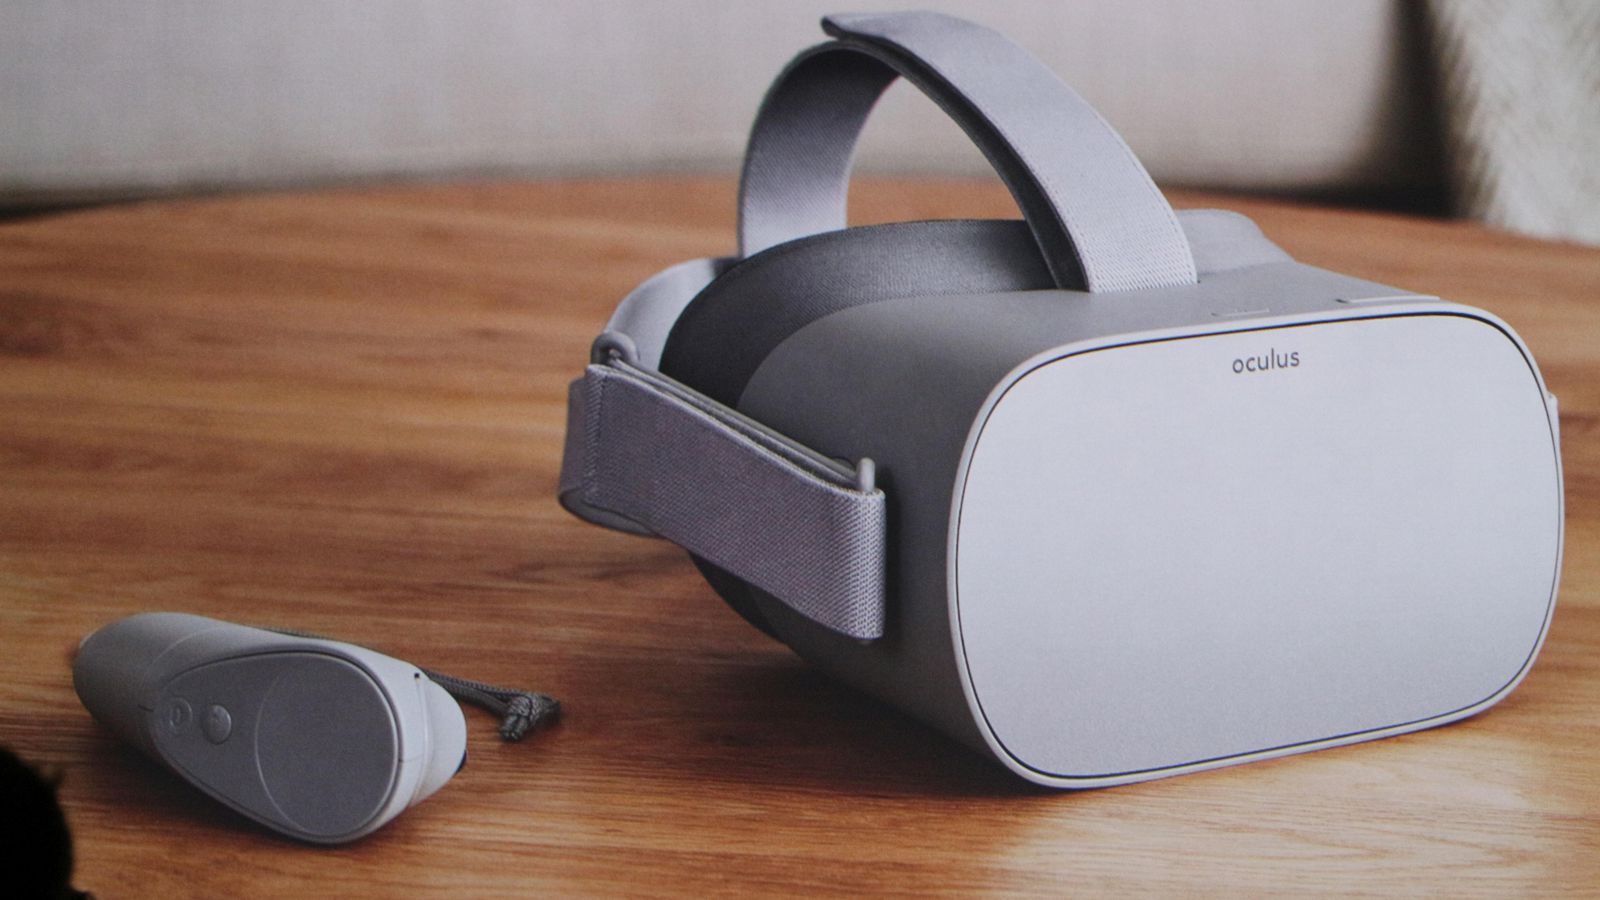 Oculus Go แว่น VR พลัง Snapdragon 821 ผ่านการรับรองจาก FCC แล้ว พบกันได้ในงาน CES